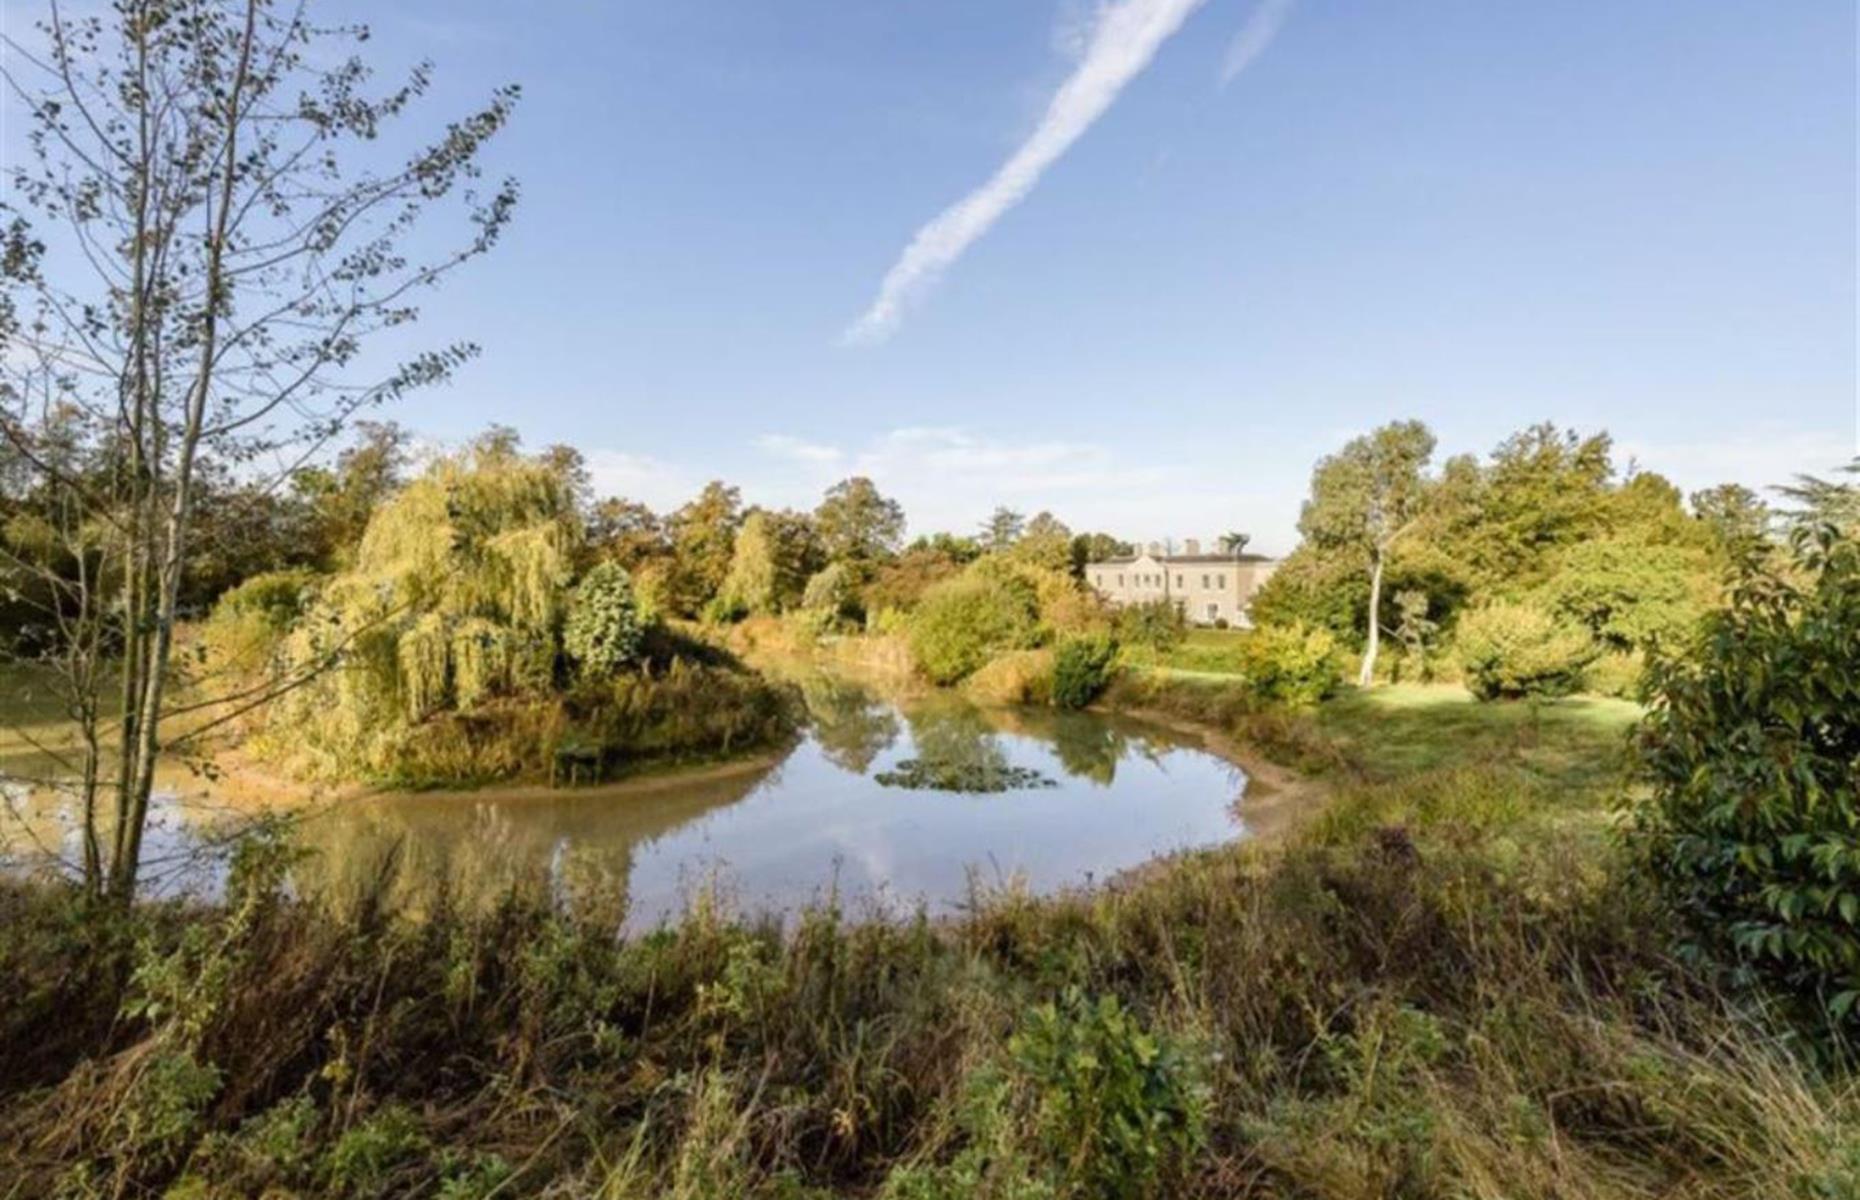 Great Expectations mansion, Hertfordshire, £6.2 million ($8.15m)